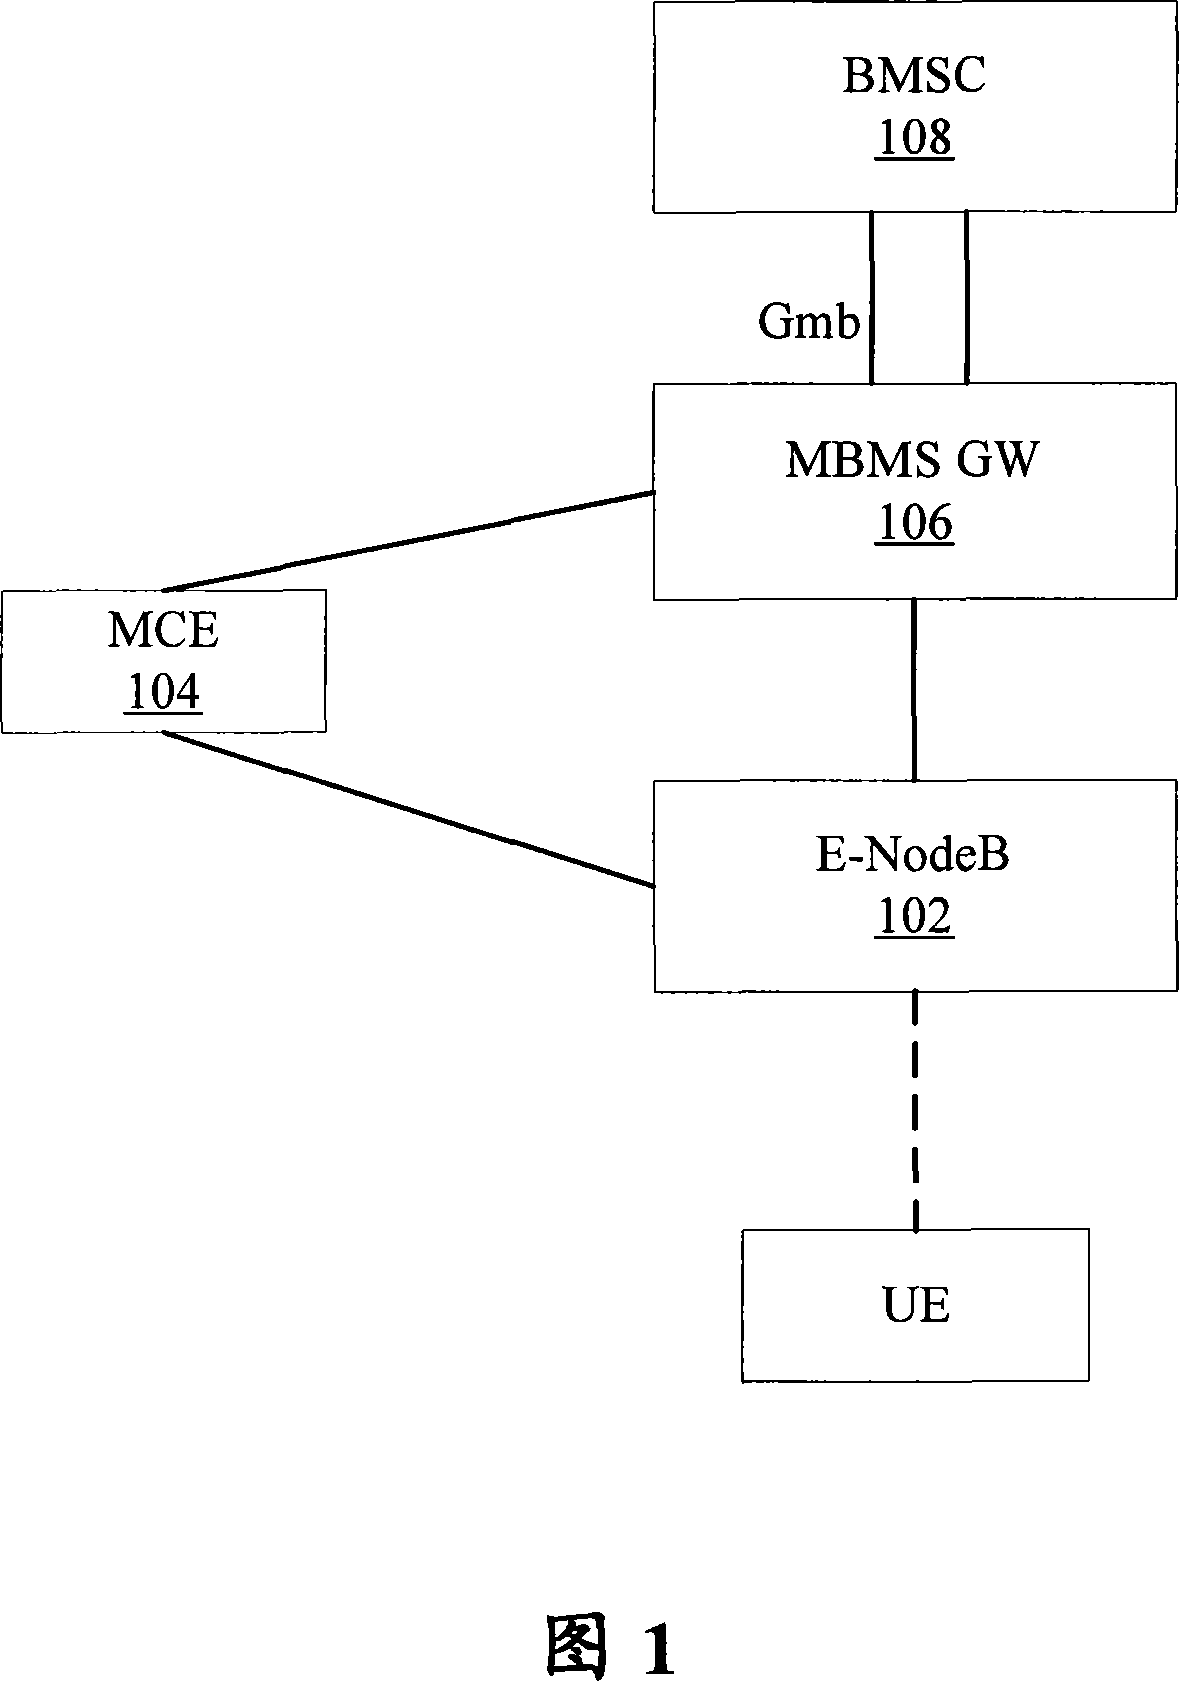 Method for establishing data transmission channel on MBMS carrying face based on MBMS gateway